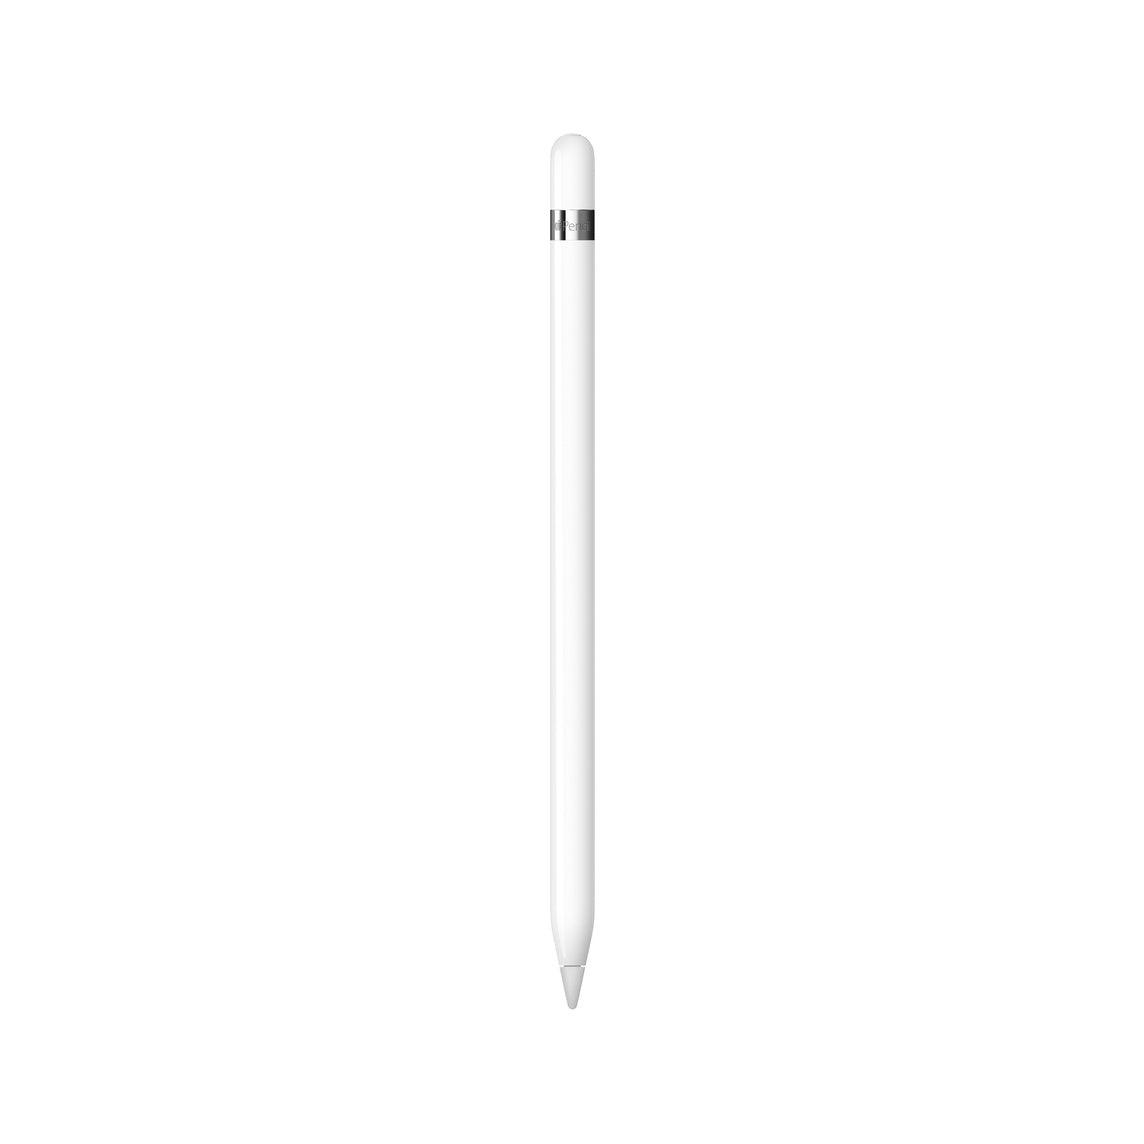 Apple Pencil (1st Generation) - Grab Your Gadget